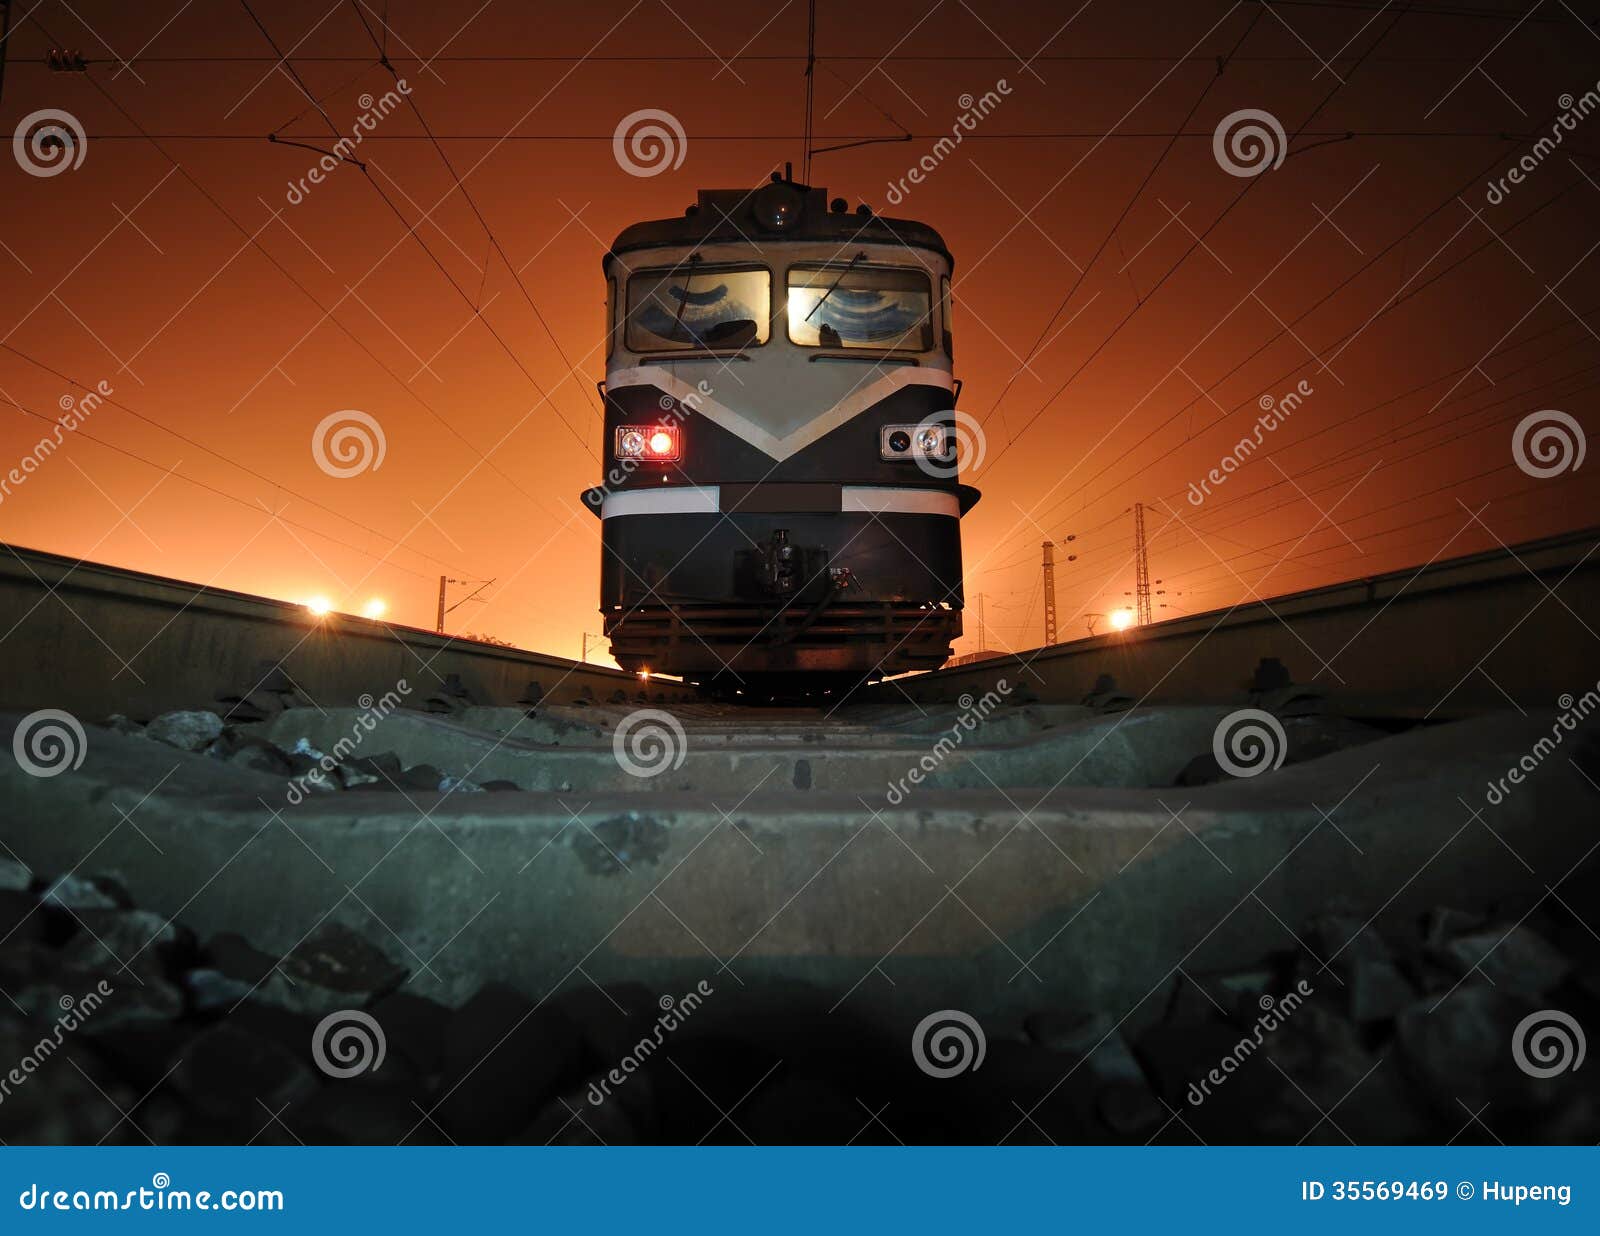 train at night